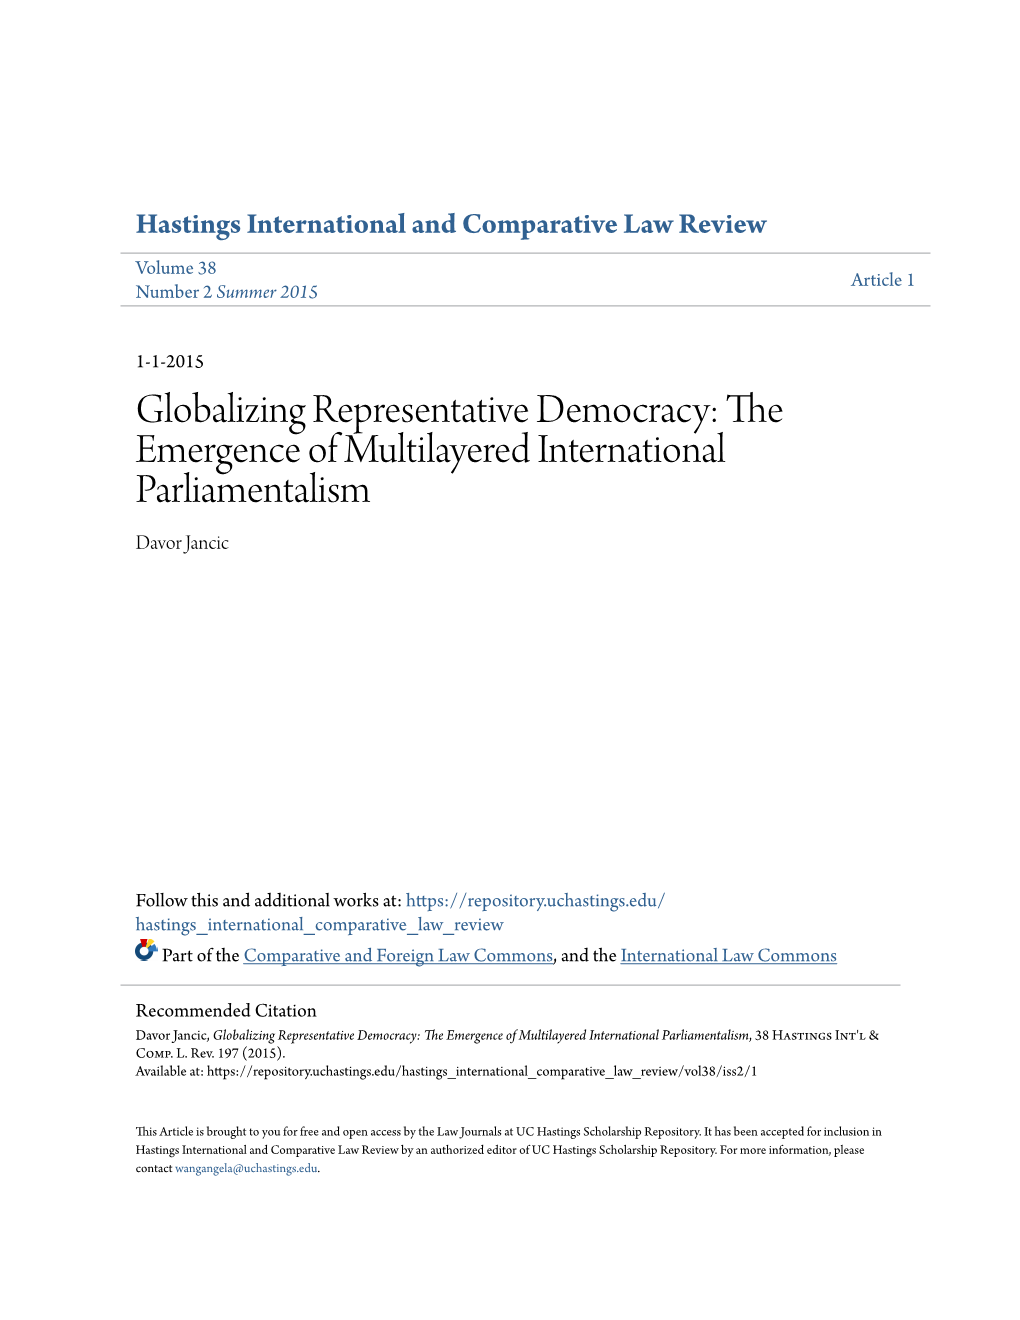 Globalizing Representative Democracy: the Emergence of Multilayered International Parliamentalism Davor Jancic